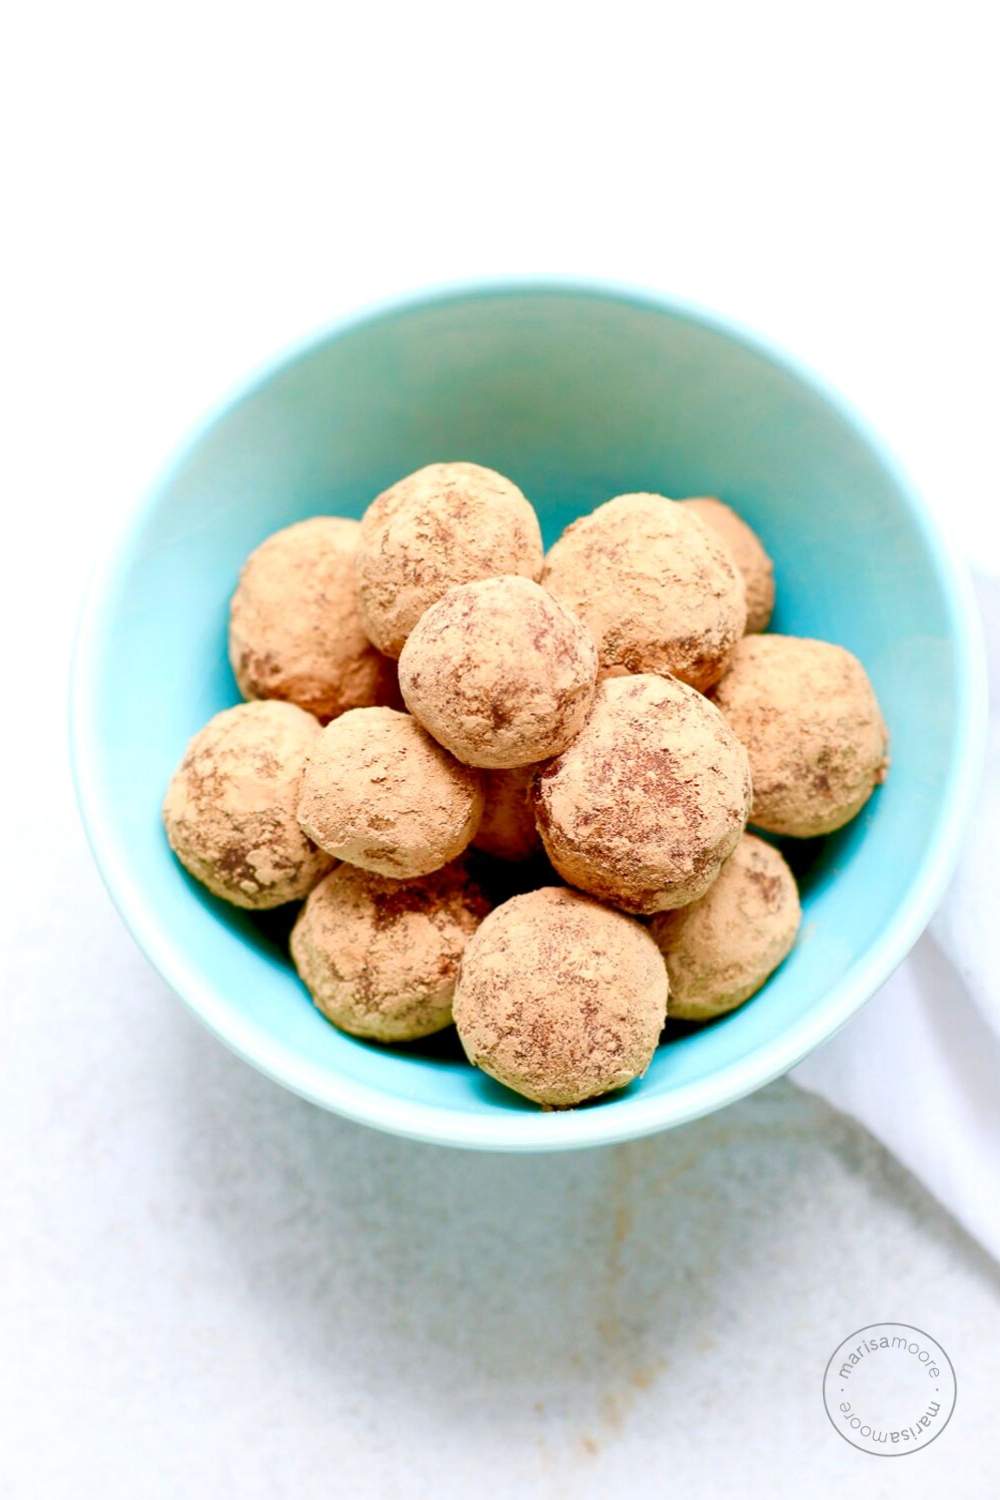 cocoa almond truffles in a blue bowl